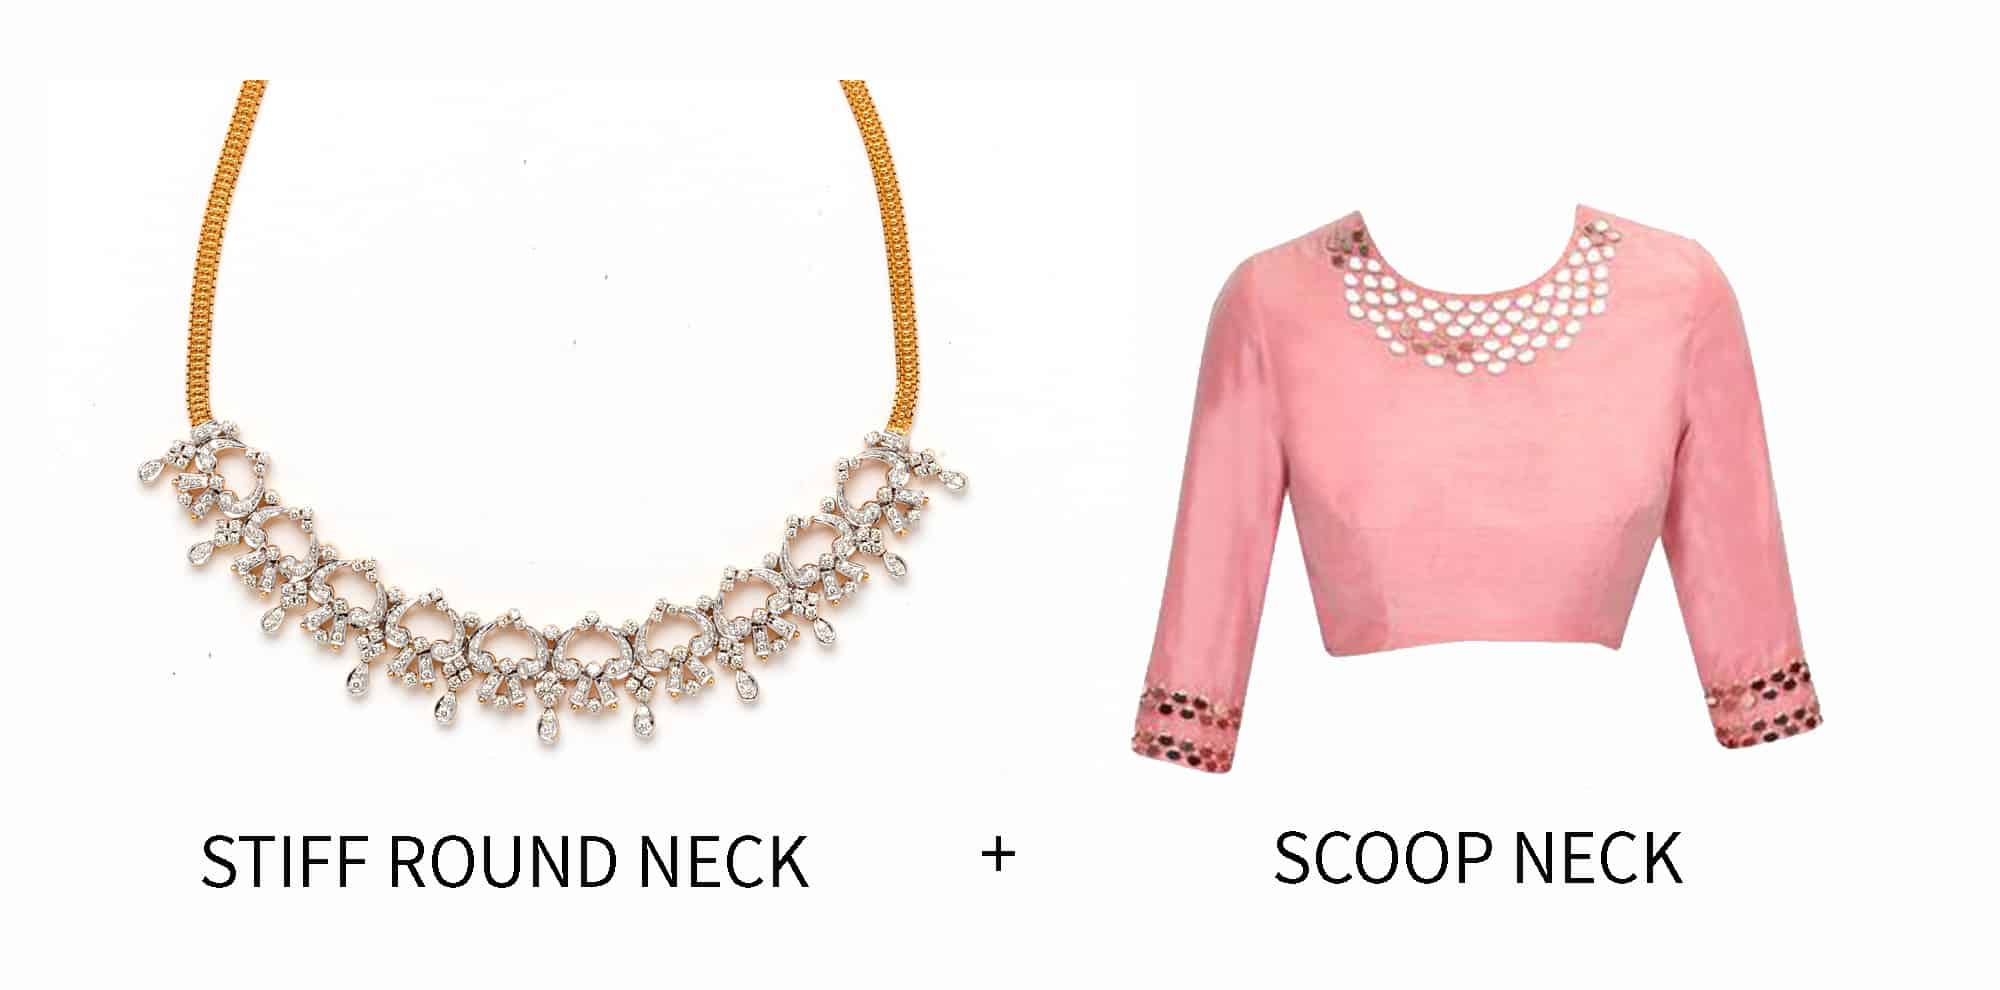 Scoop neckline diamond necklace